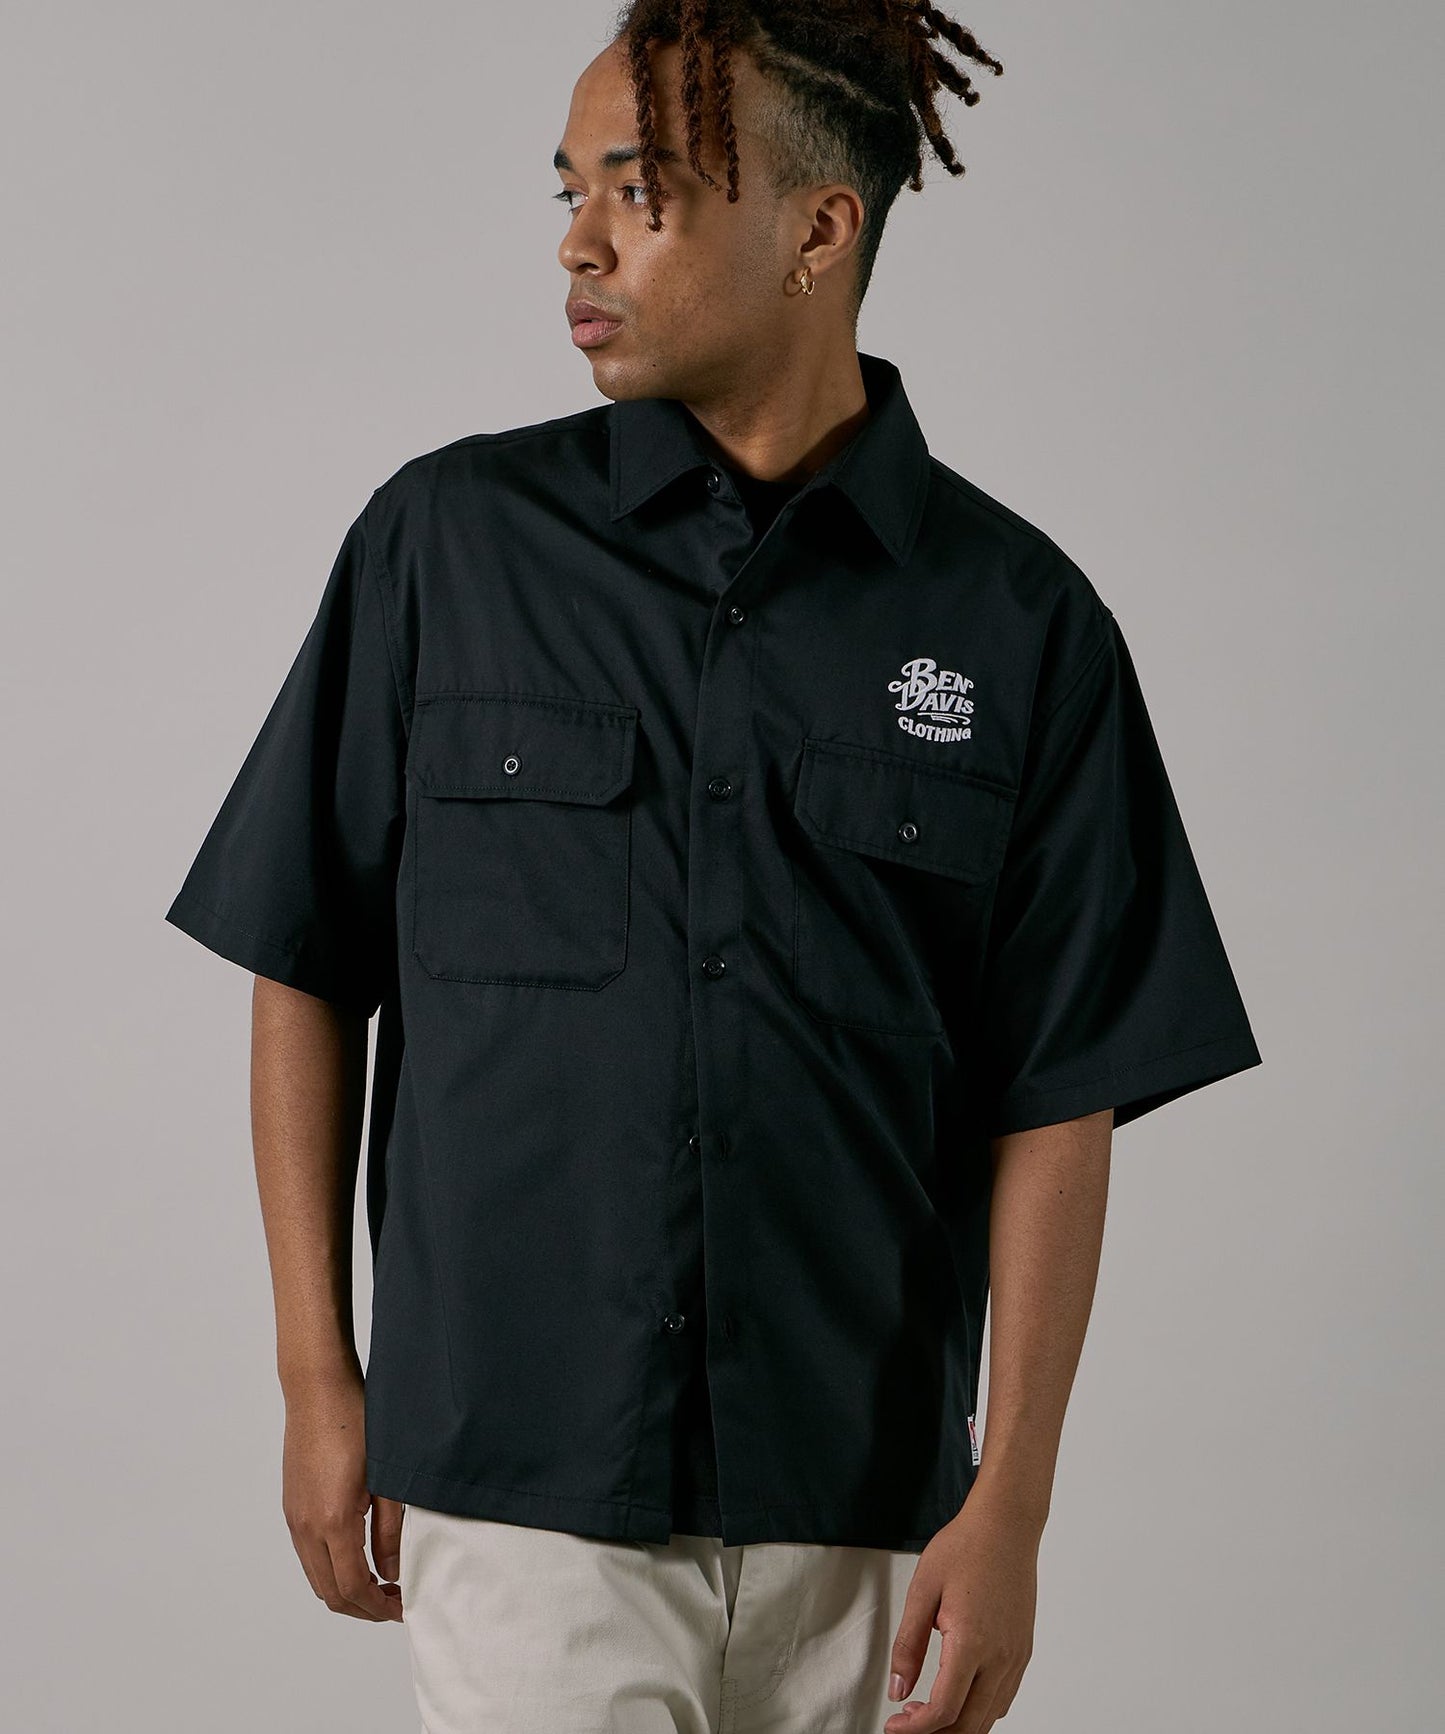 NEEDLEWORK S/S WORK SHIRT / 半袖 ワークシャツ レギュラーカラー 刺繍 ブランドロゴ ブラック